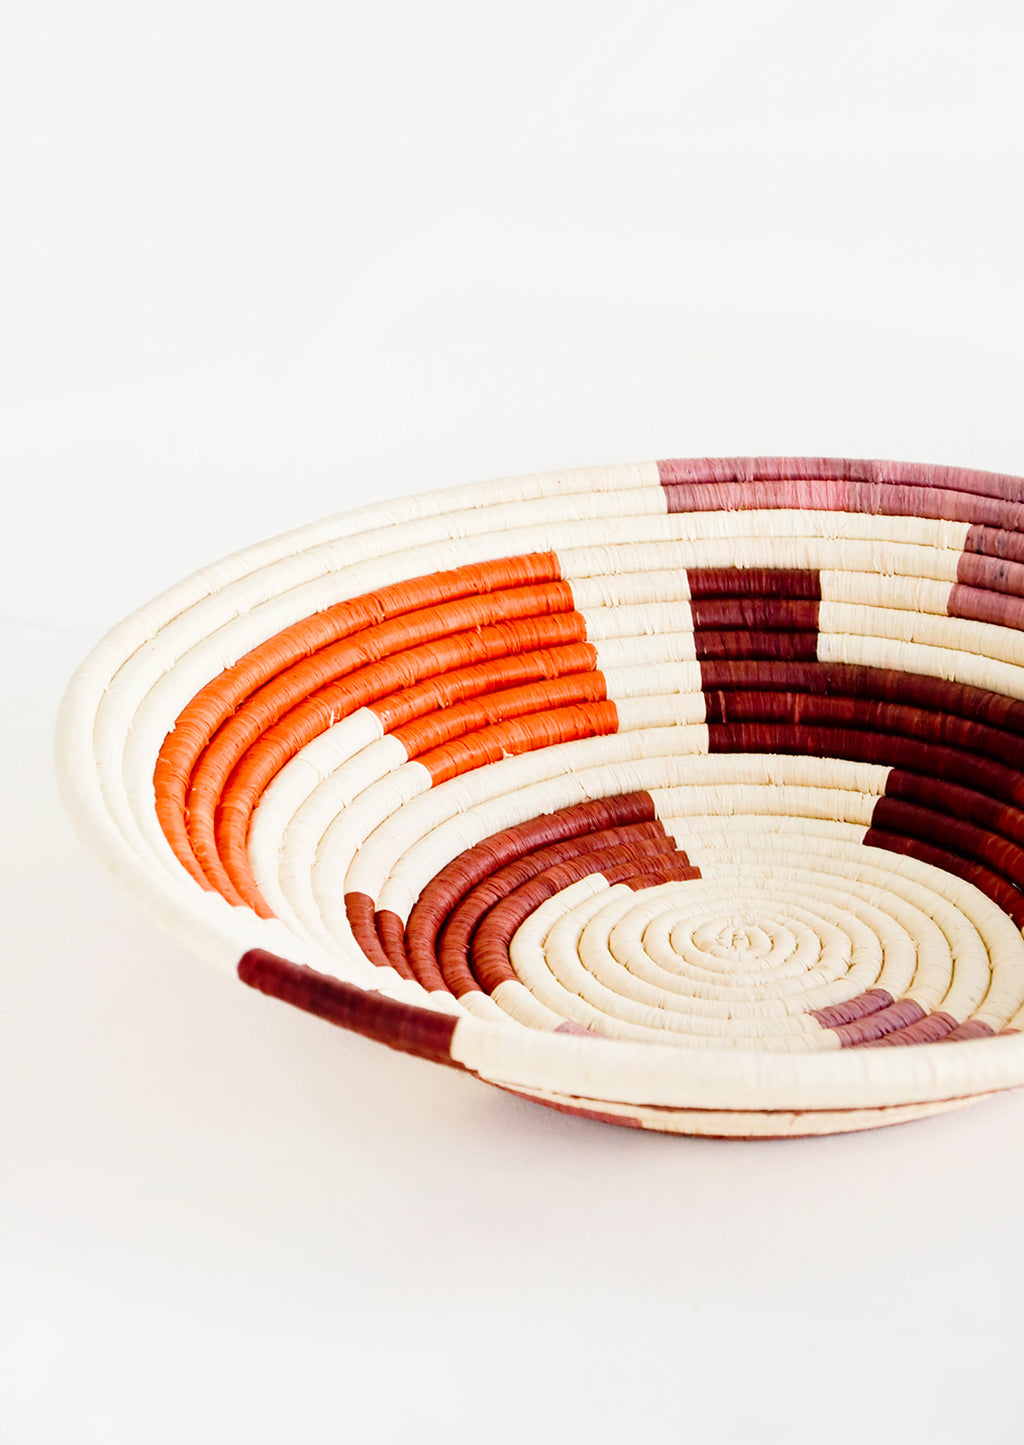 2: Shallow woven raffia bowl with maze print in wine, orange and mauve